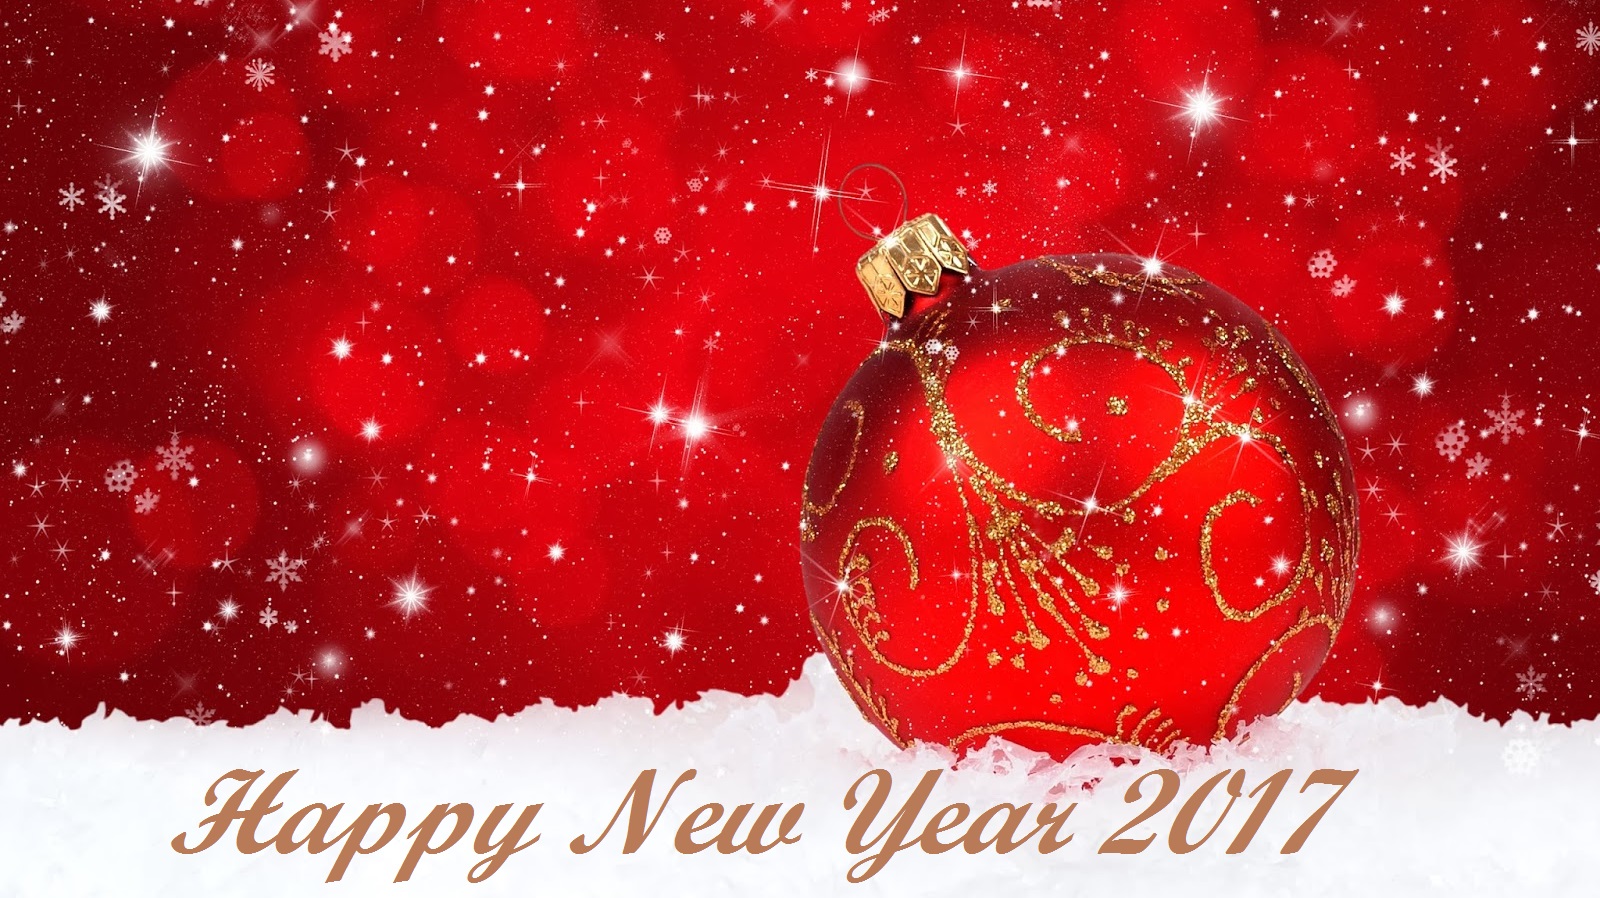 new year greetings card image